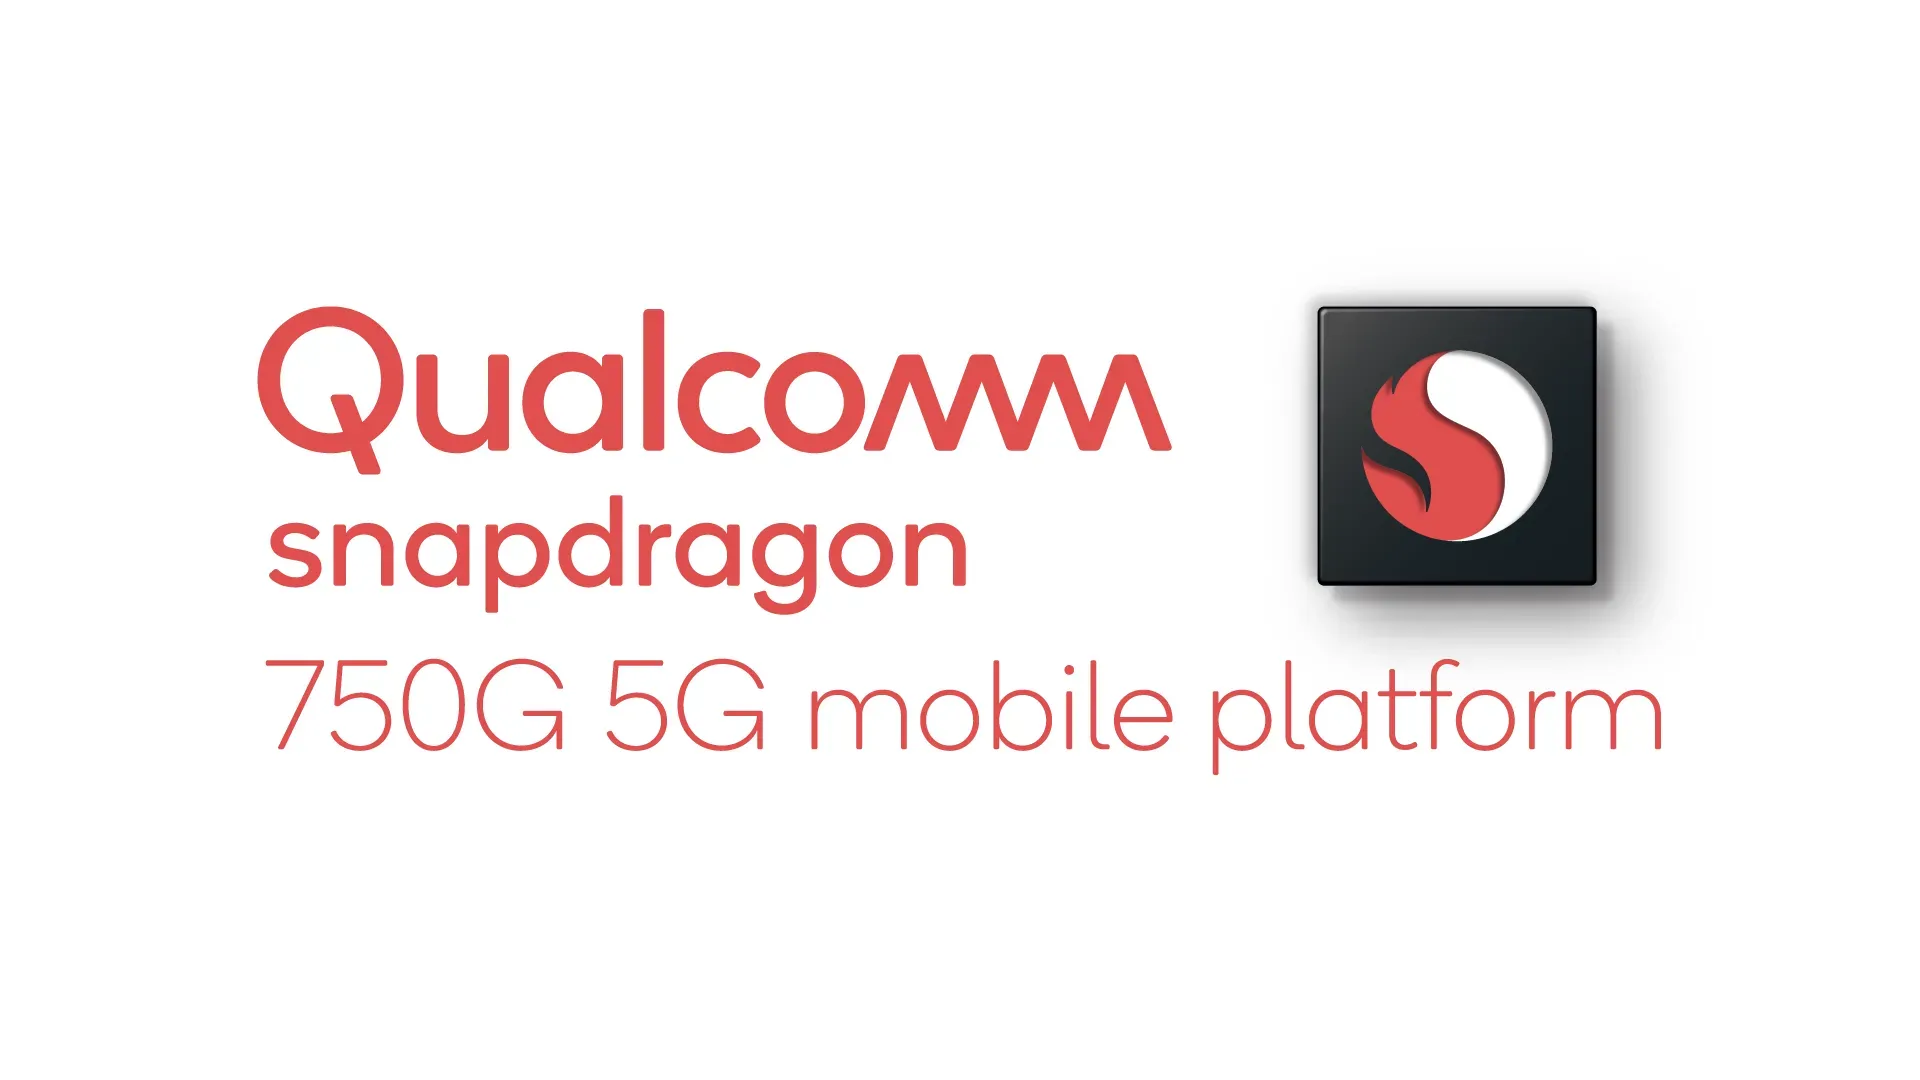 Logotipo do chipset Qualcomm Snapdragon 750G